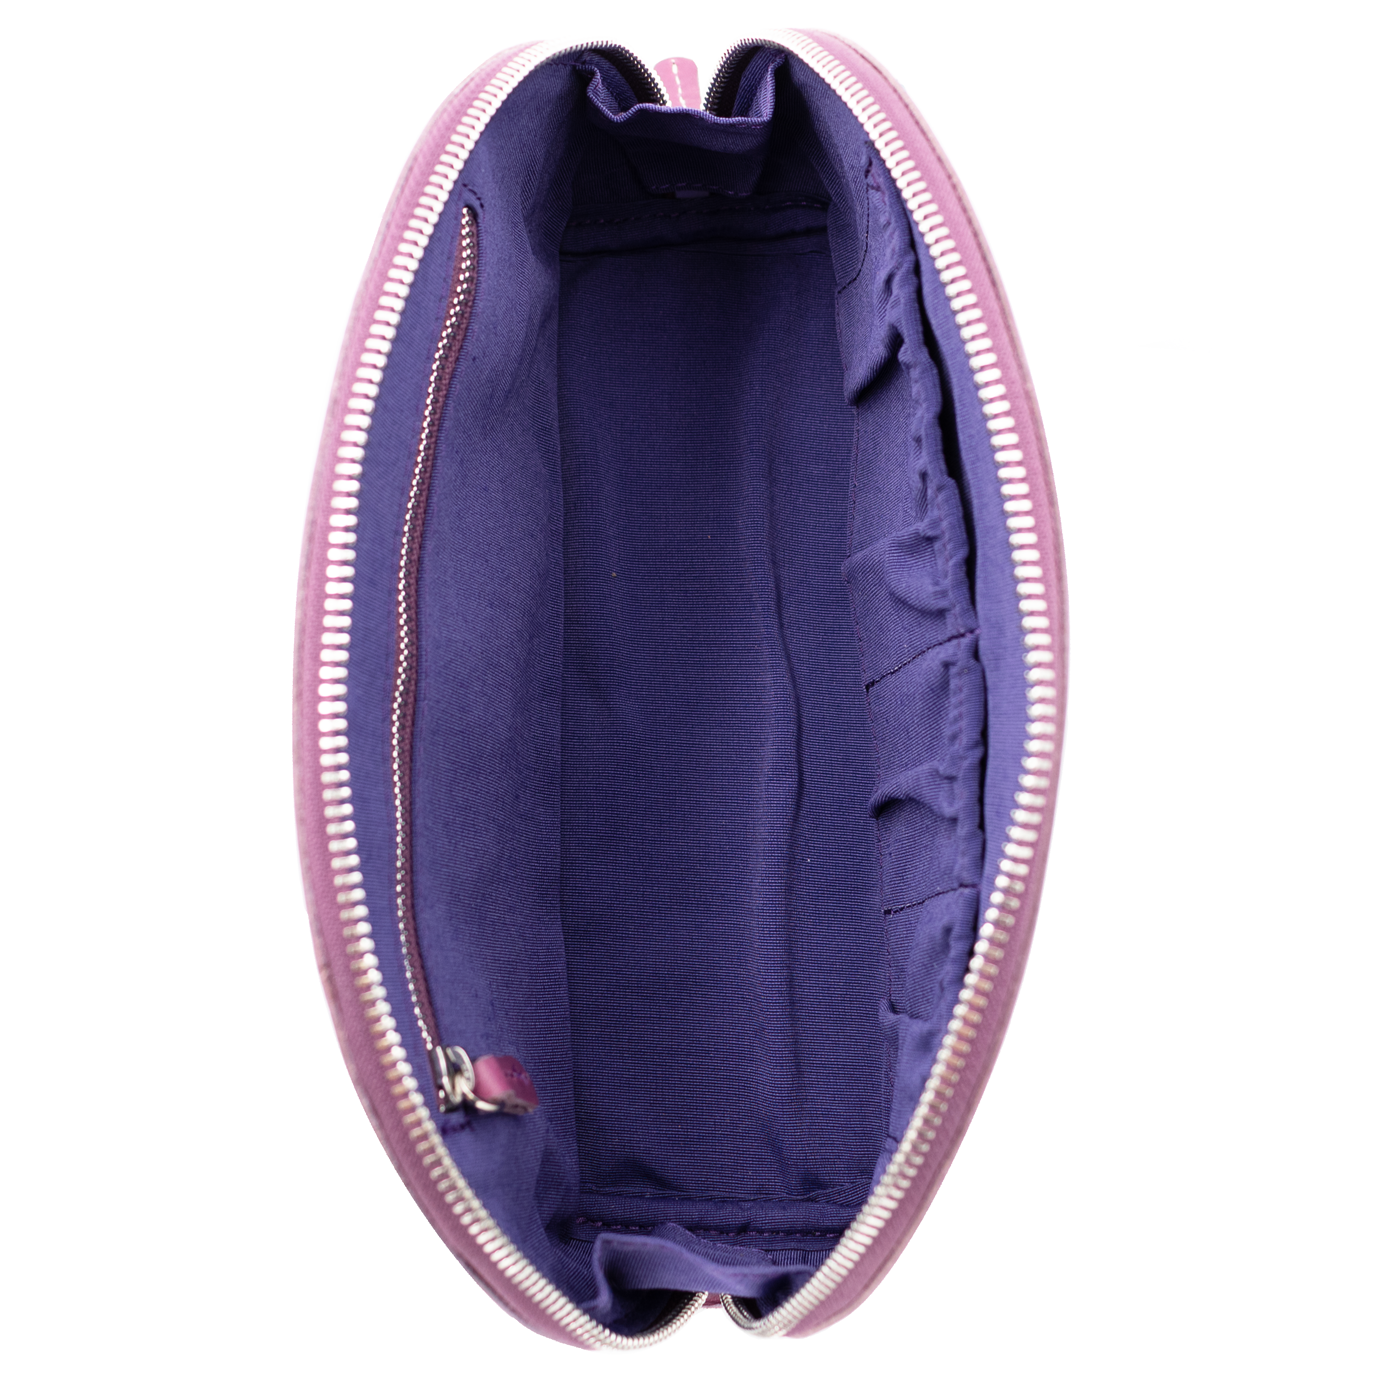 Galen Leather Co. Leather Lunar Makeup / Toiletry bag - Purple